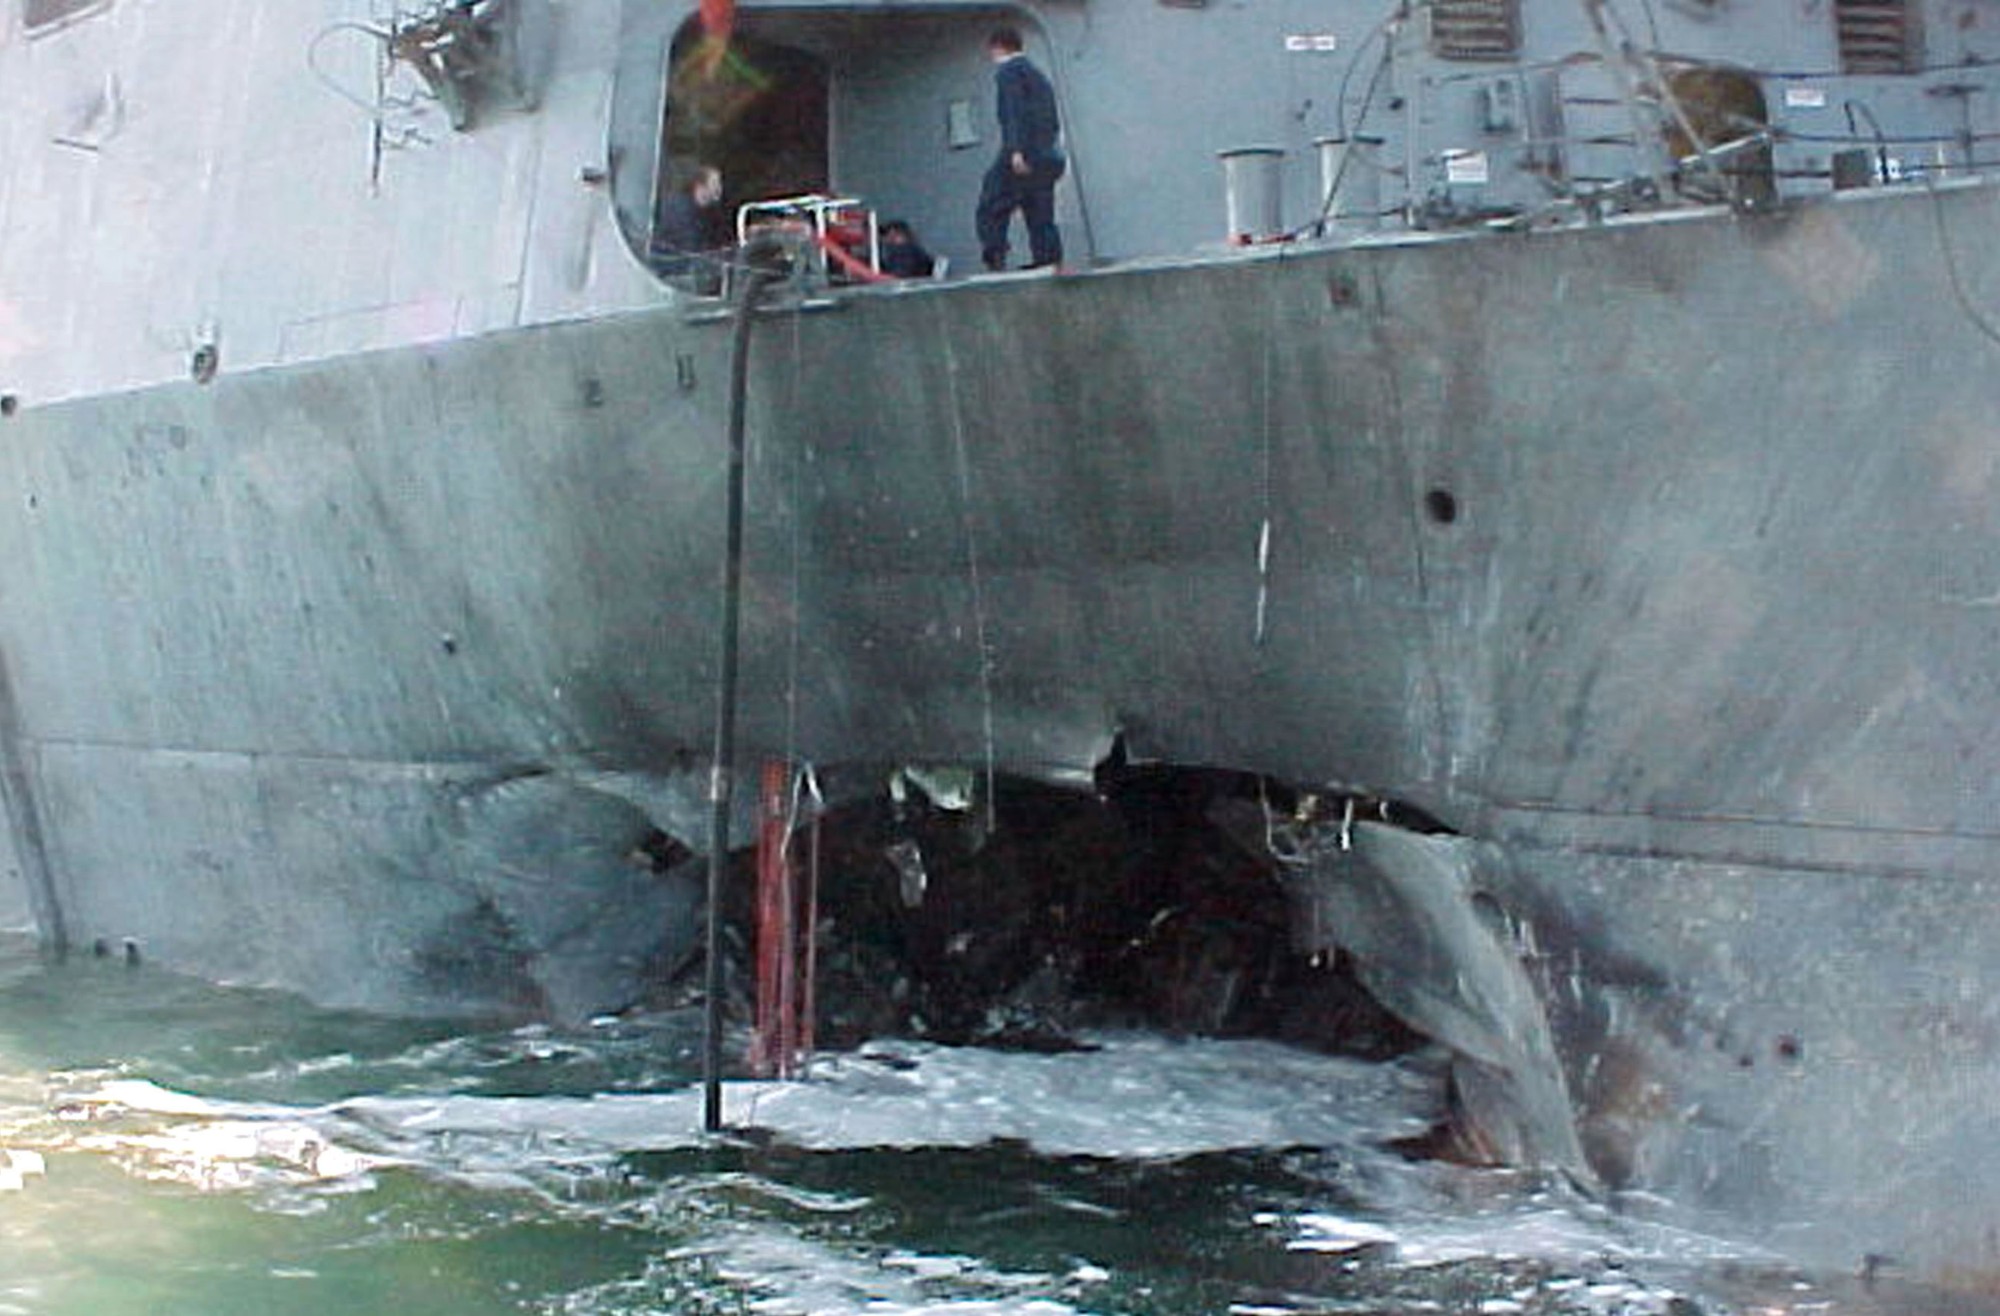 ddg-67 uss cole guided missile destroyer arleigh burke class navy aegis 55 terrorist attack aden yemen bombing damage